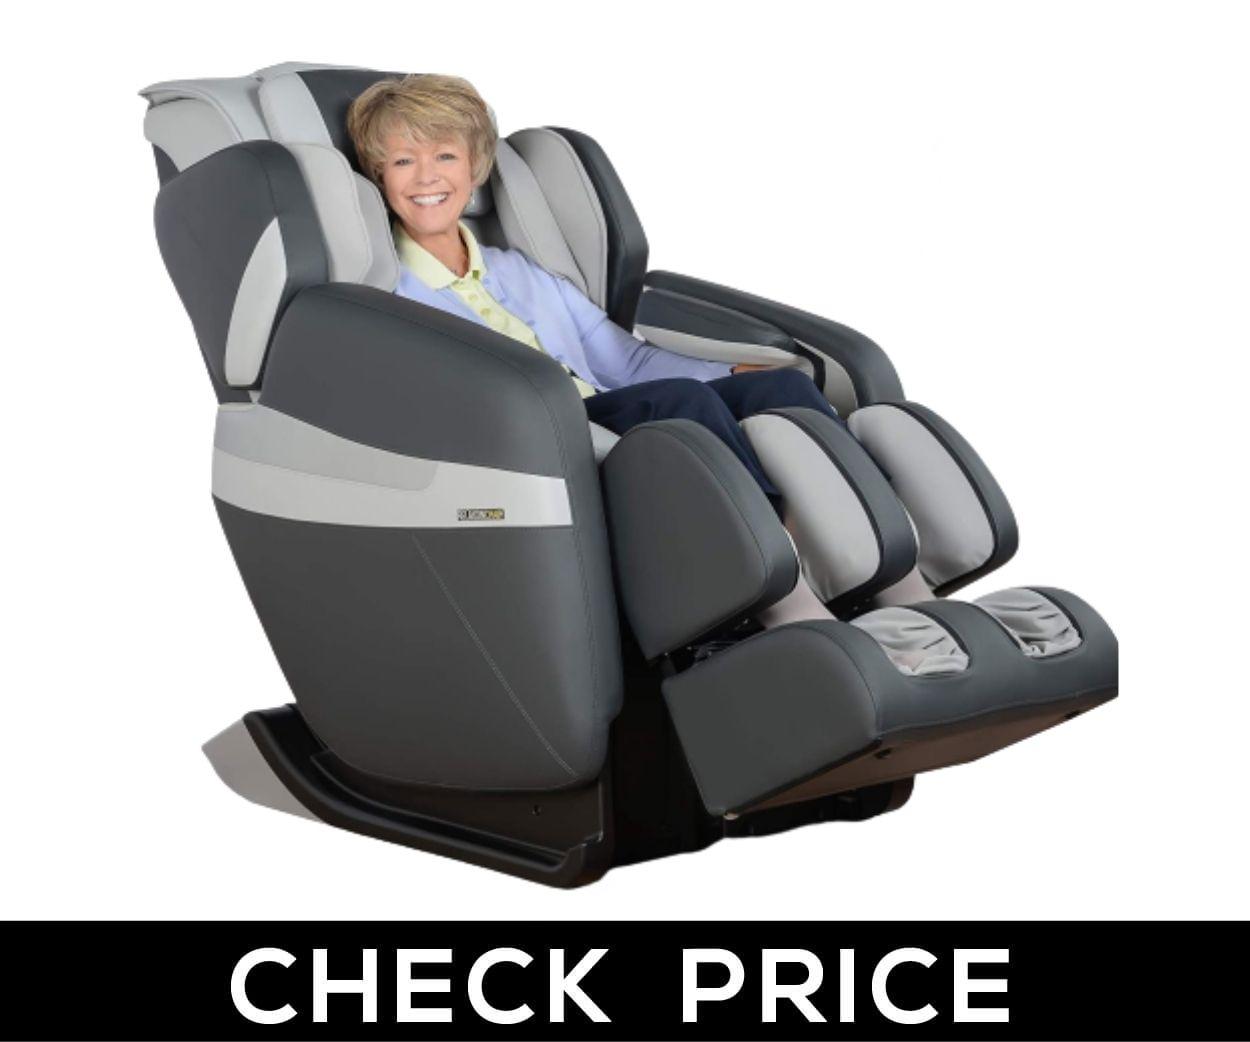 RelaxOnChair – Full Body Zero Gravity Massage Chair